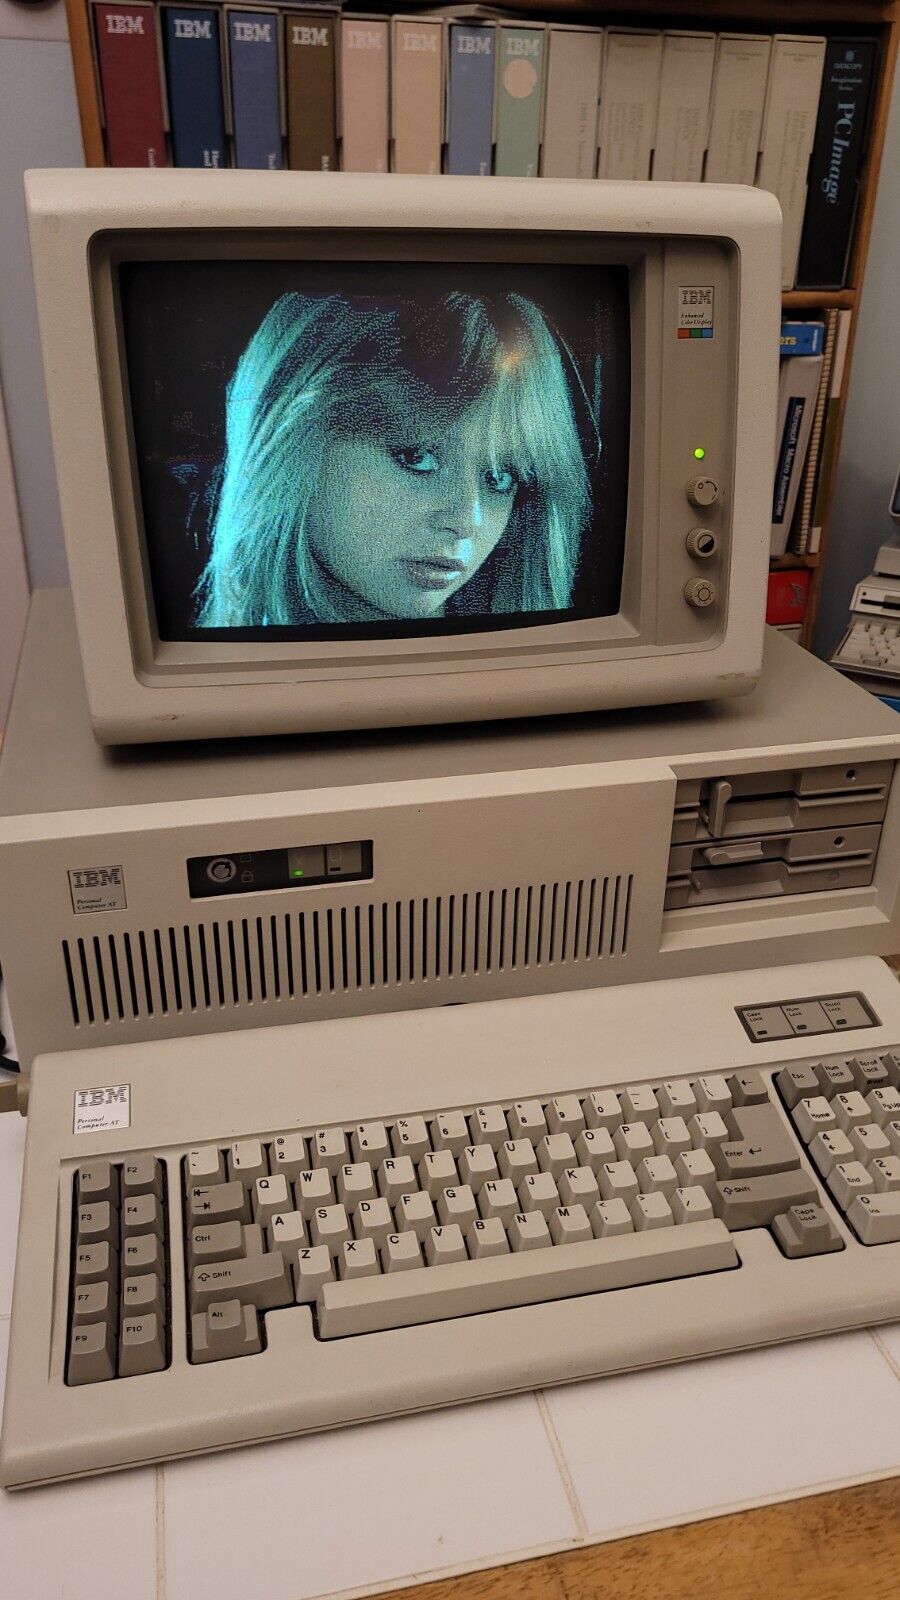 IBM 5170 PC AT 5154 EGA Monitor, Model F Keyboard, 1.5mb RAM XTIDE Floppy Drives